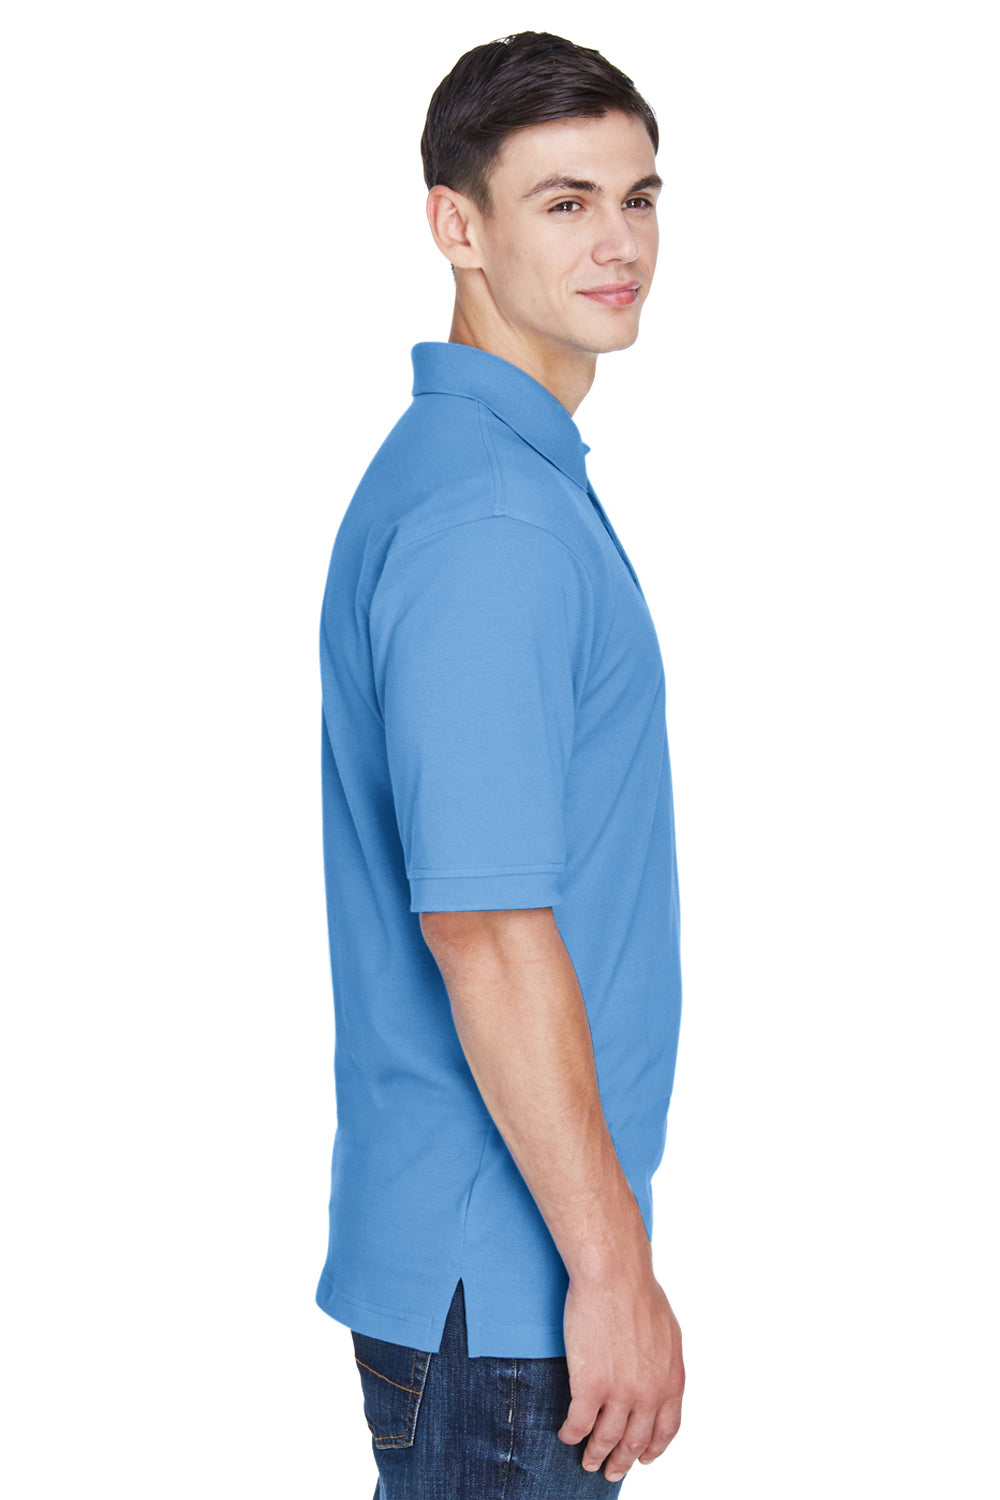 Harriton M265 Mens Easy Blend Wrinkle Resistant Short Sleeve Polo Shirt Light College Blue Side